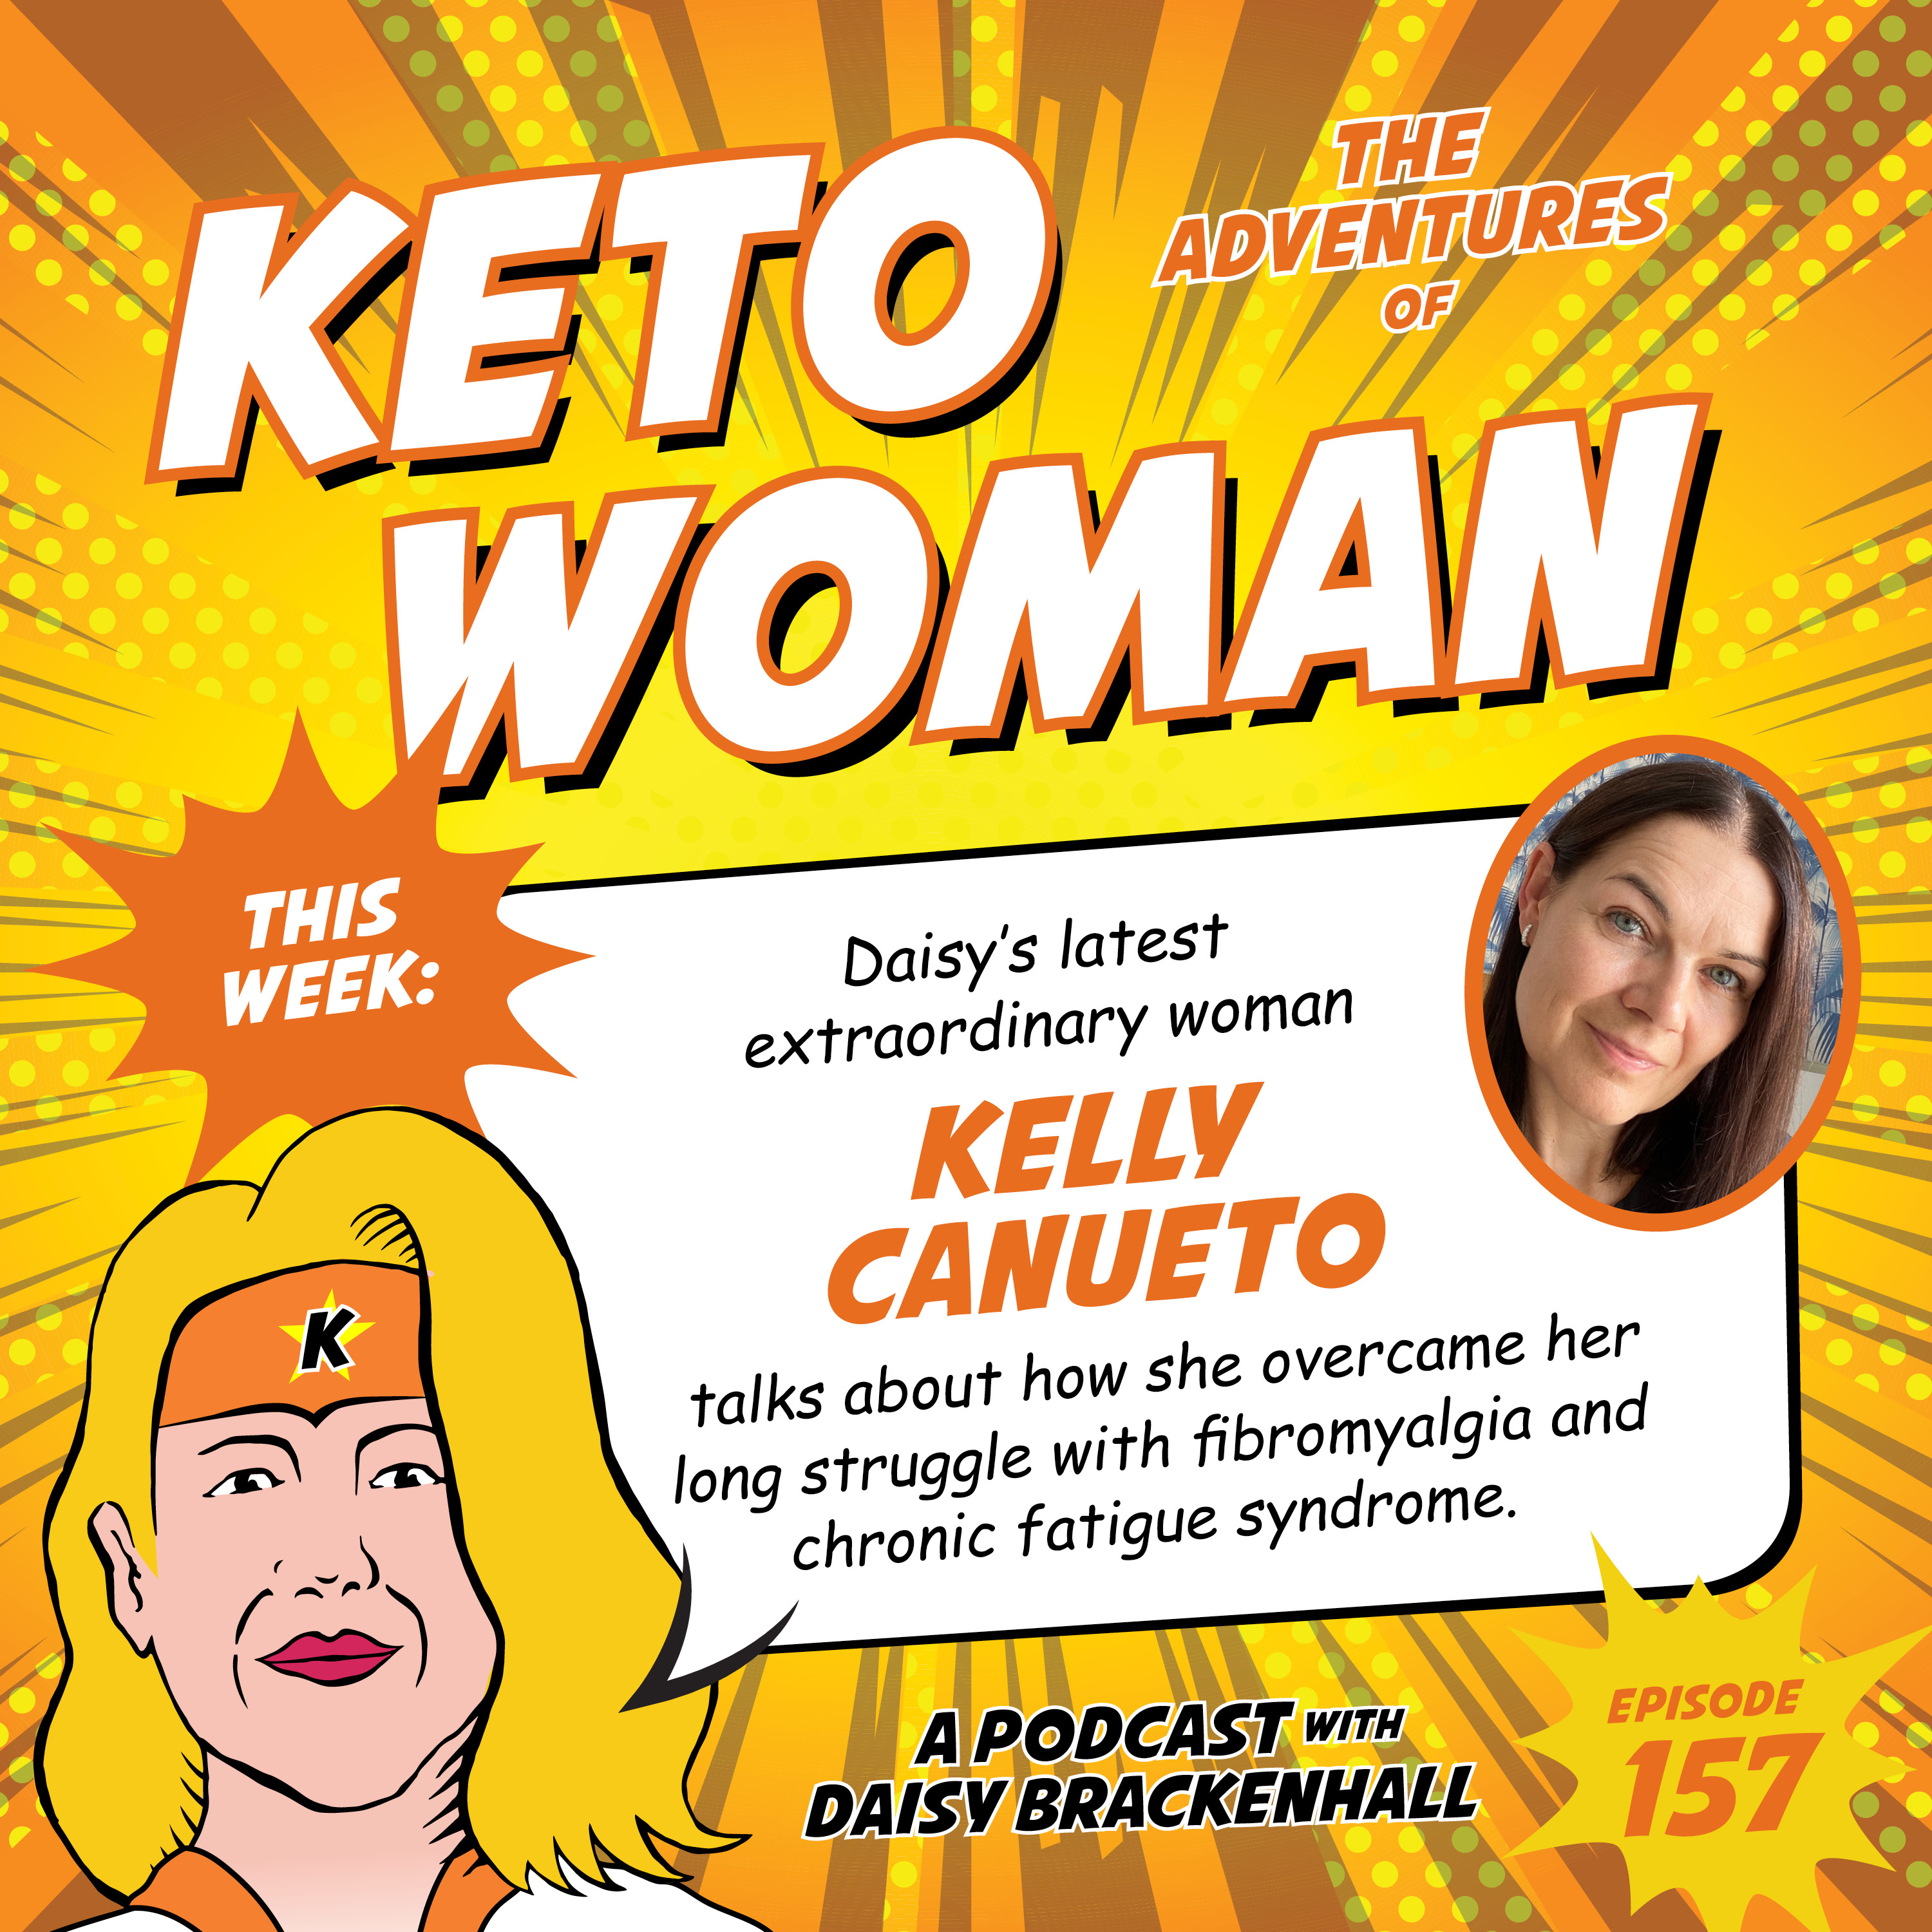 Kelly Canueto - Overcoming Fibromyalgia & Chronic Fatigue Syndrome